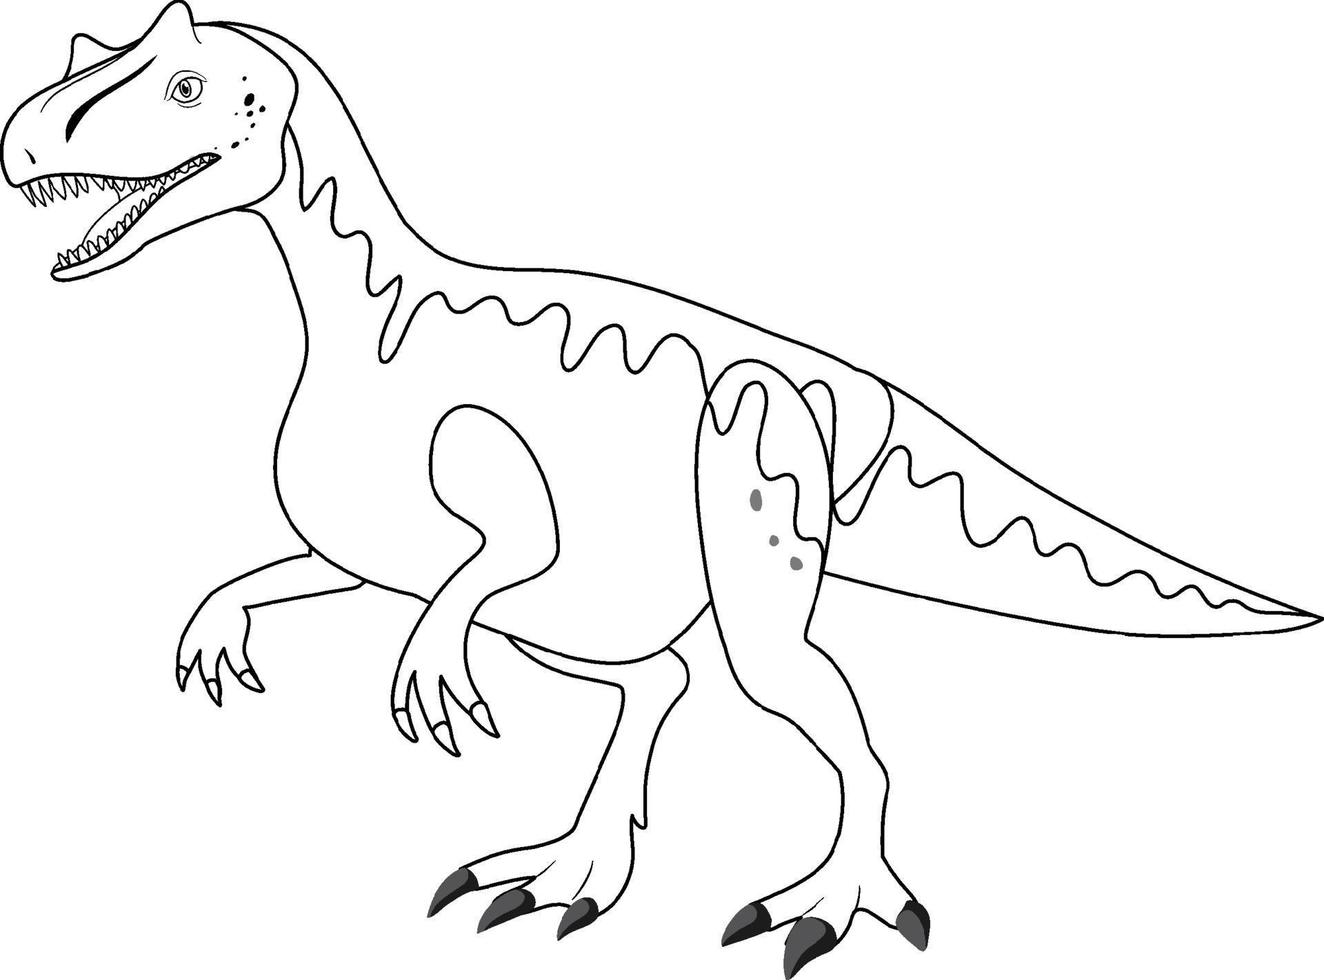 Allosaurus dinosaur doodle outline on white background vector